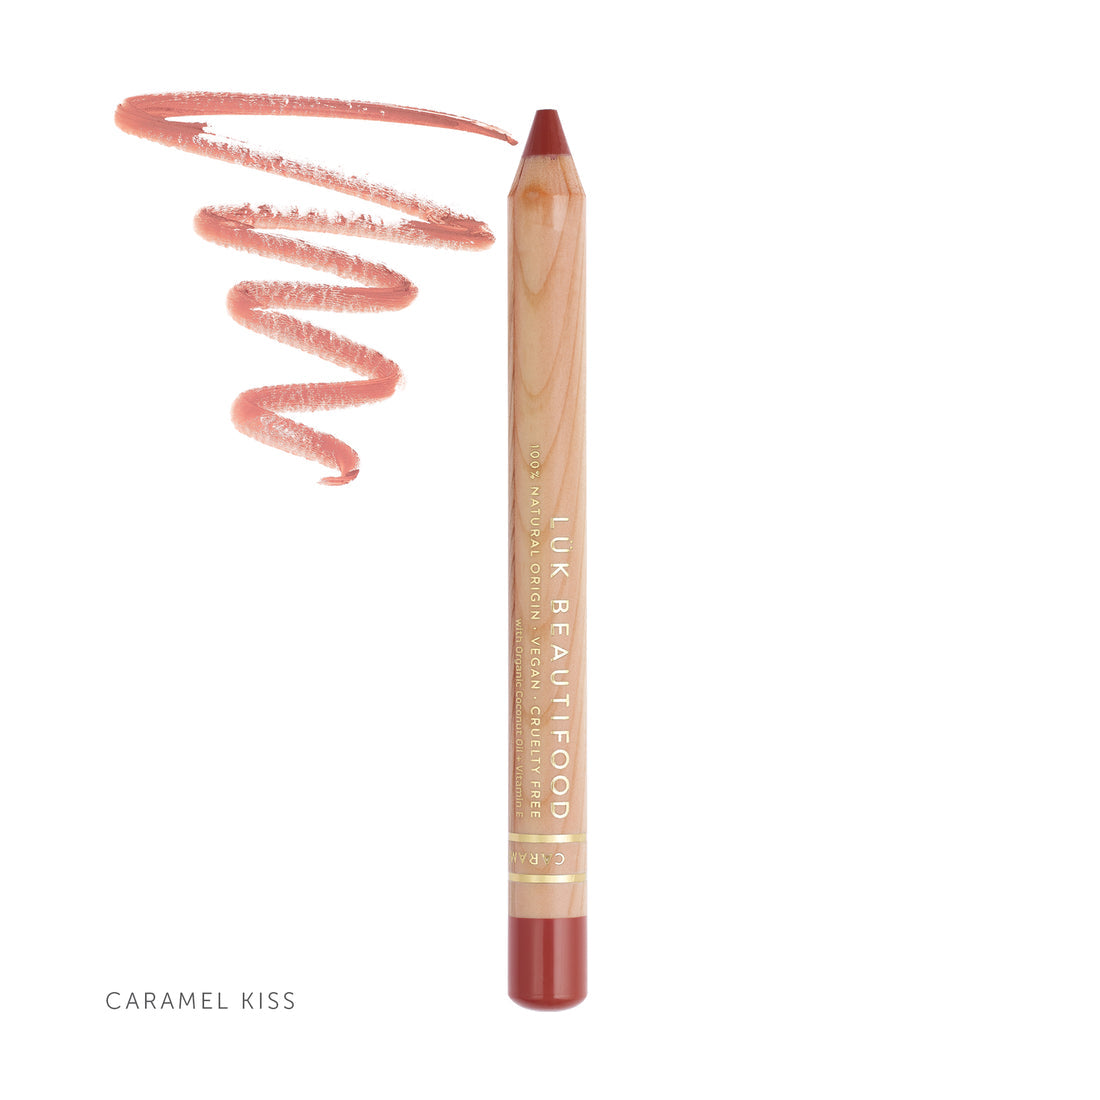 Natural Lipstick Crayon in Caramel Kiss